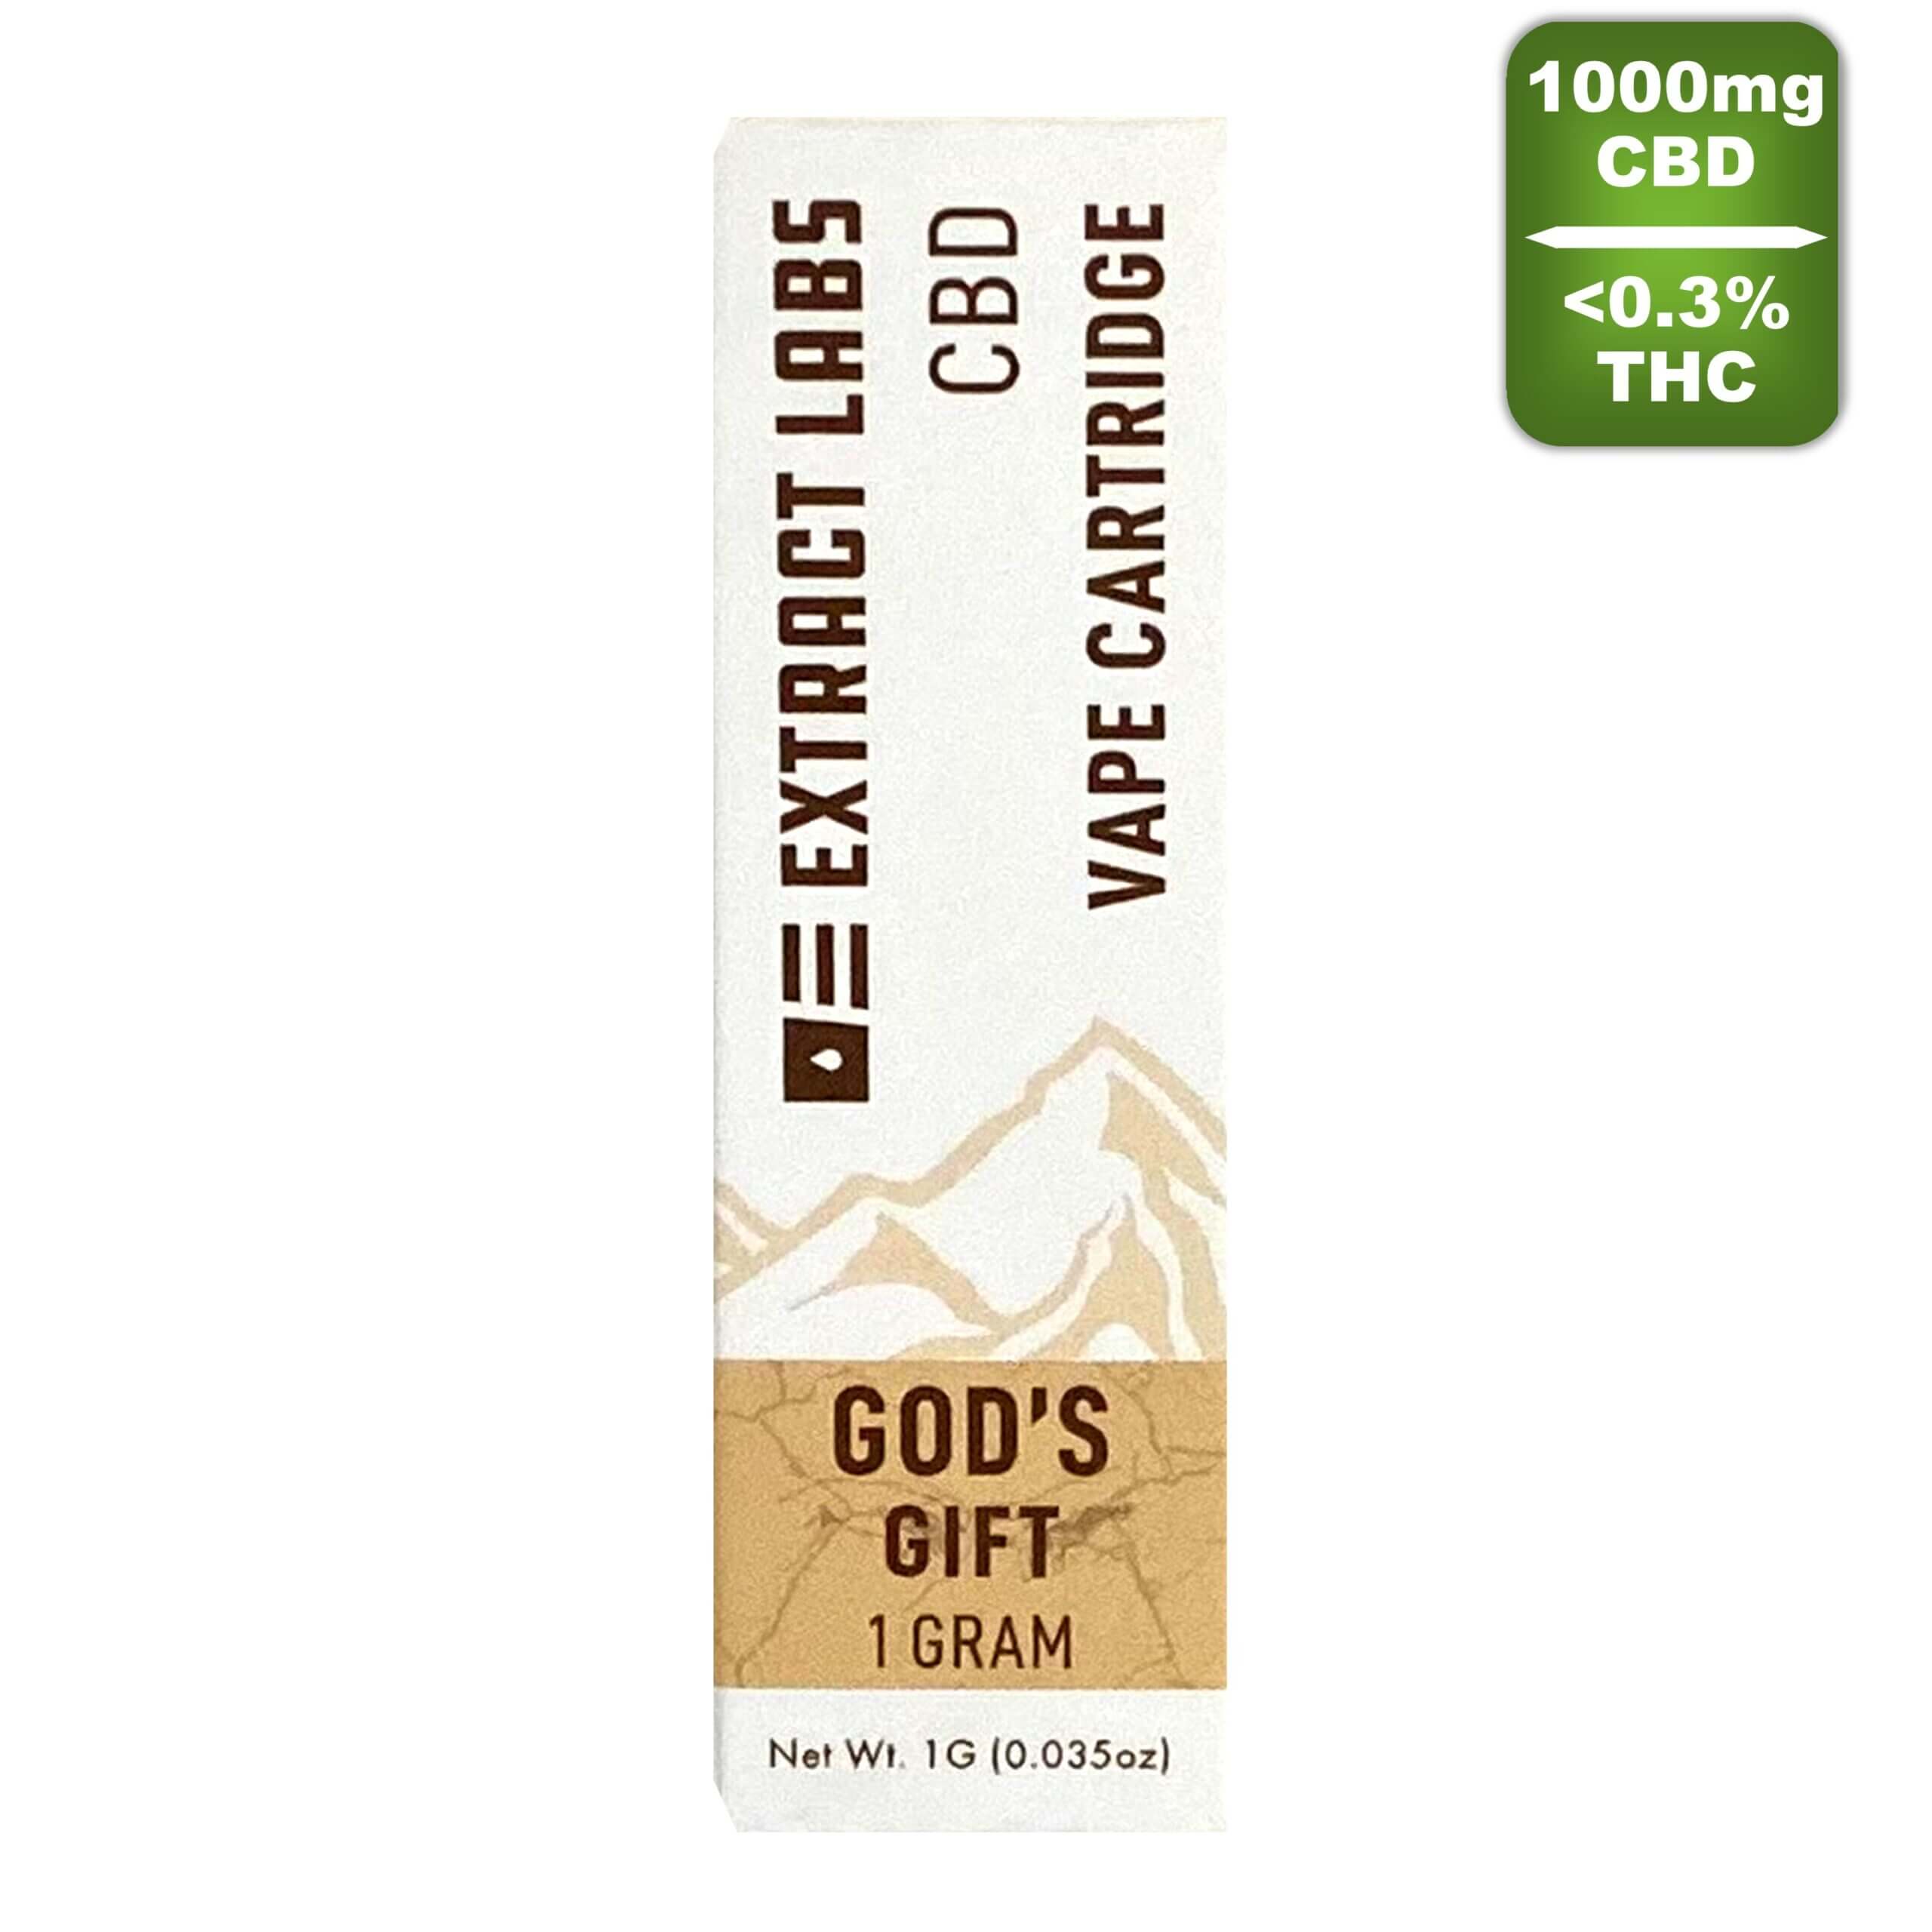 Extract Labs - God's Gift Vape cartridge CBD + THC